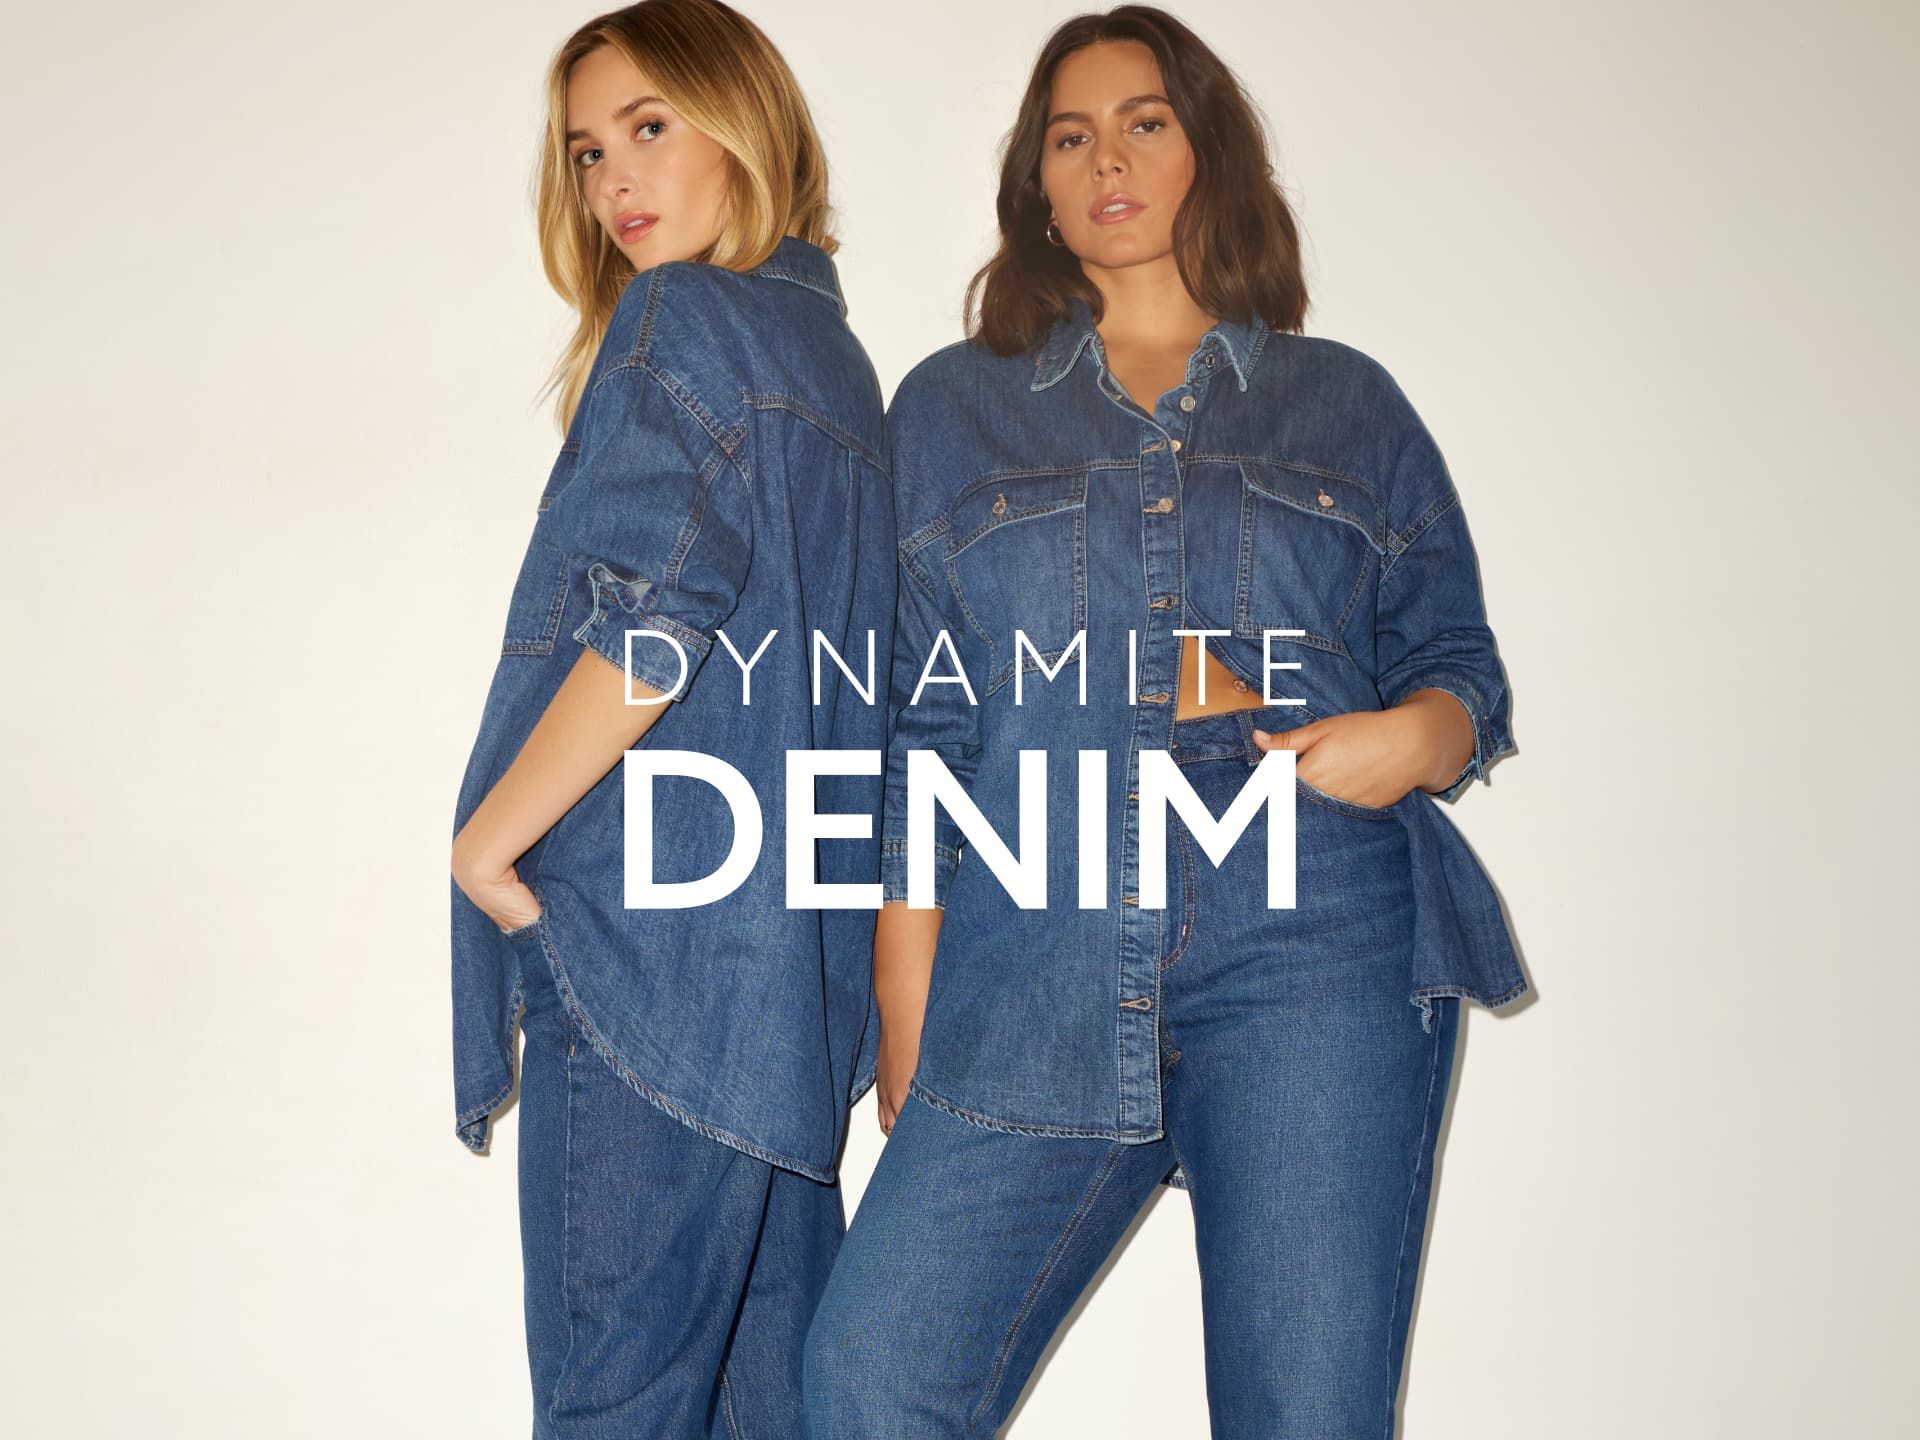 Two models wear dark blue jeans with a black denim button down shirt.